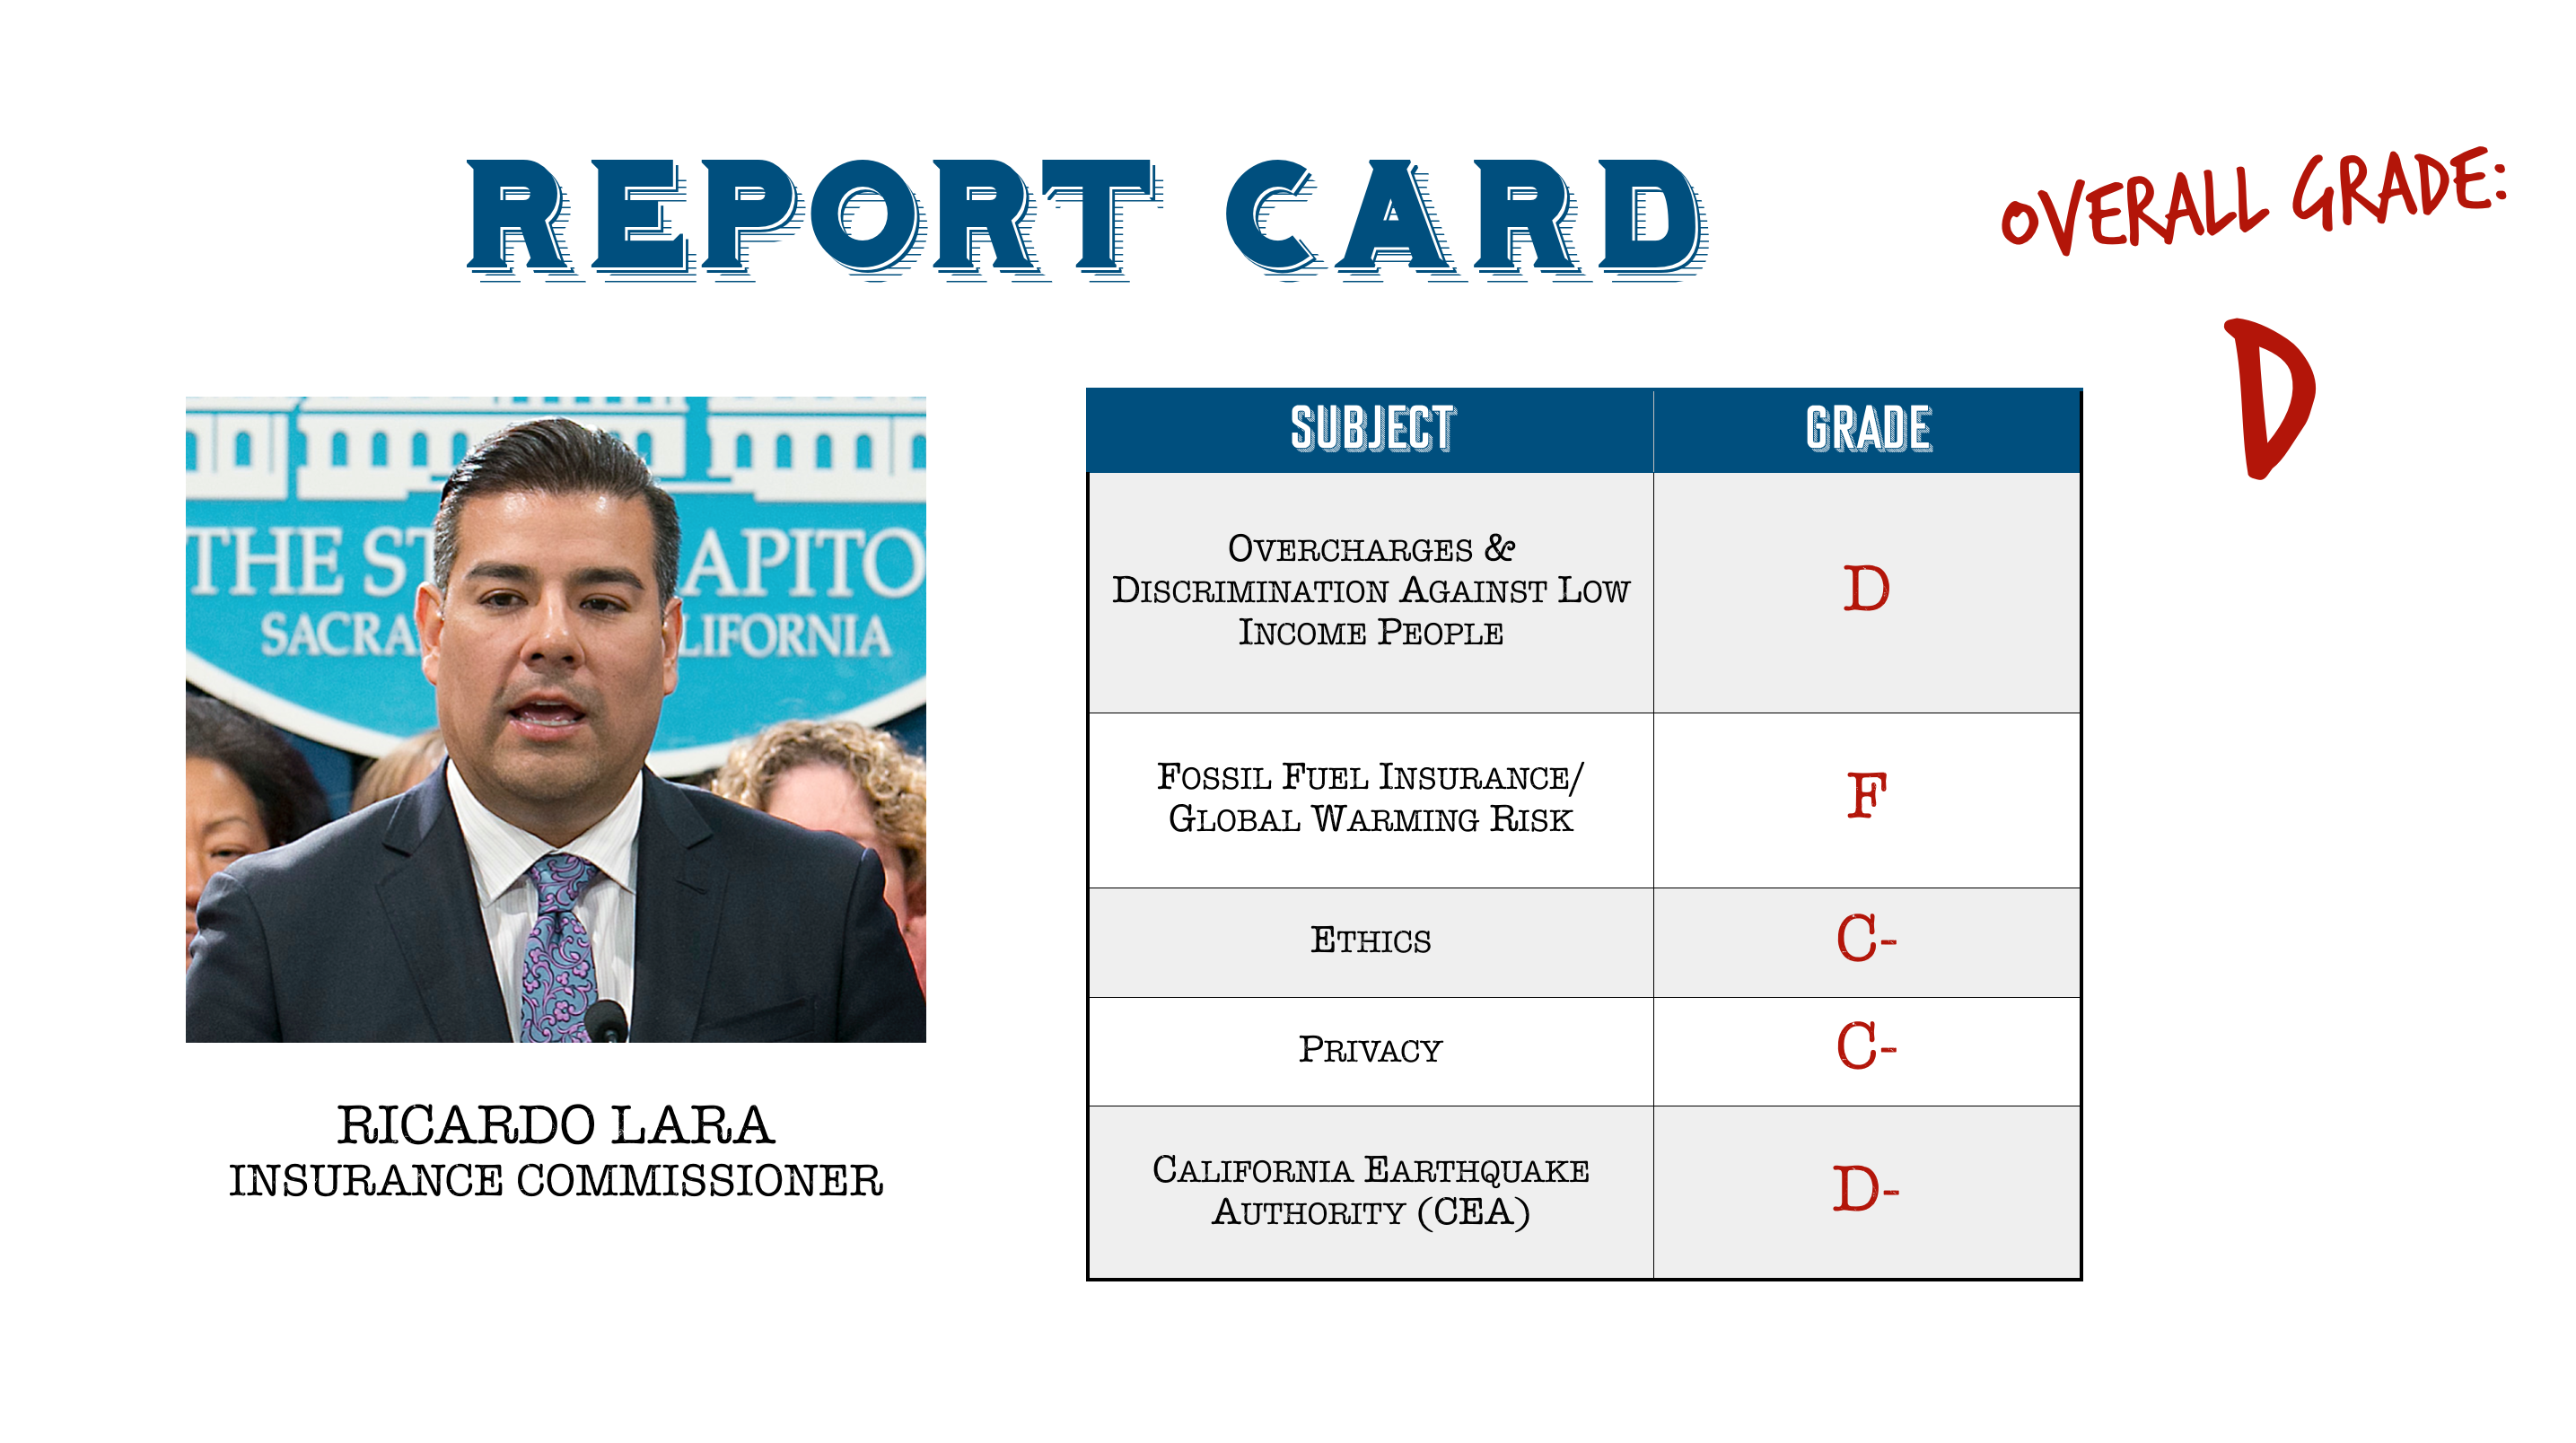 Report Card for Ricardo Lara